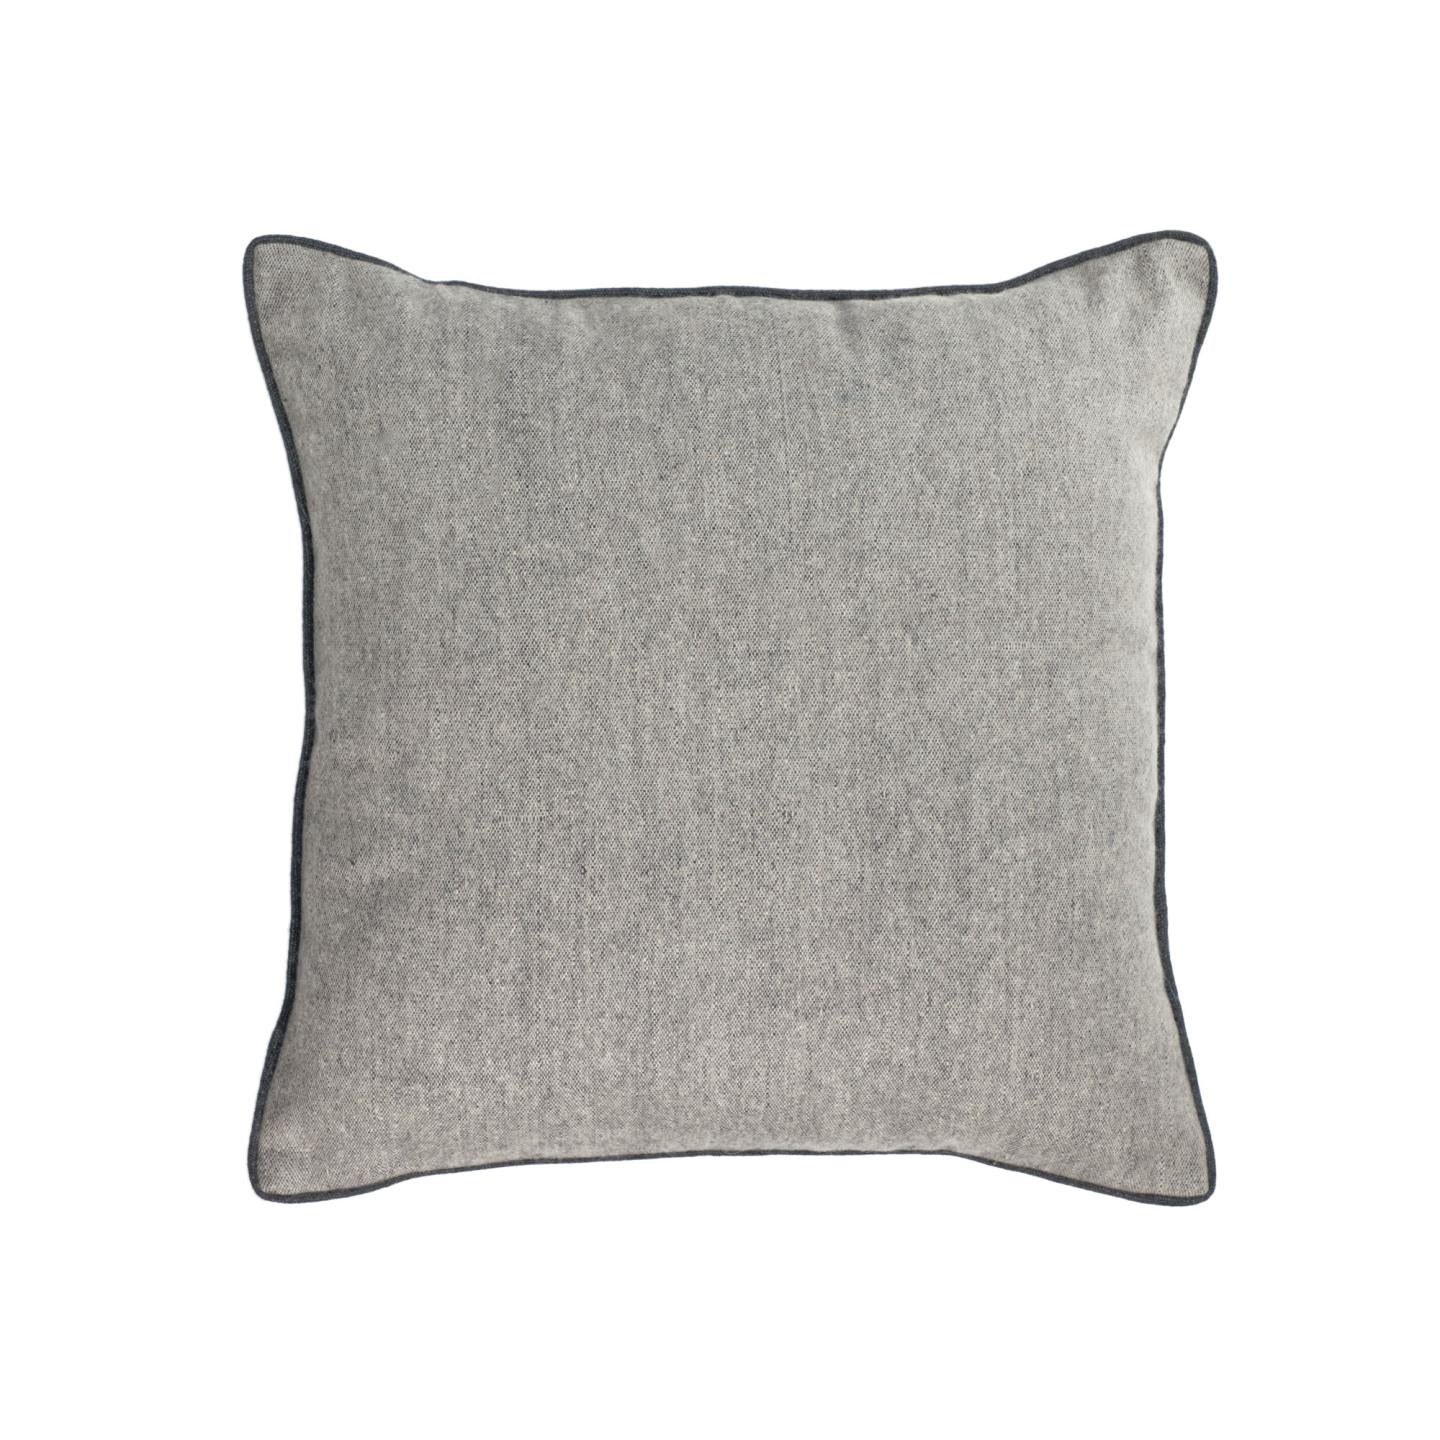 Alcara grey cushion cover with black border 45 x 45 cm